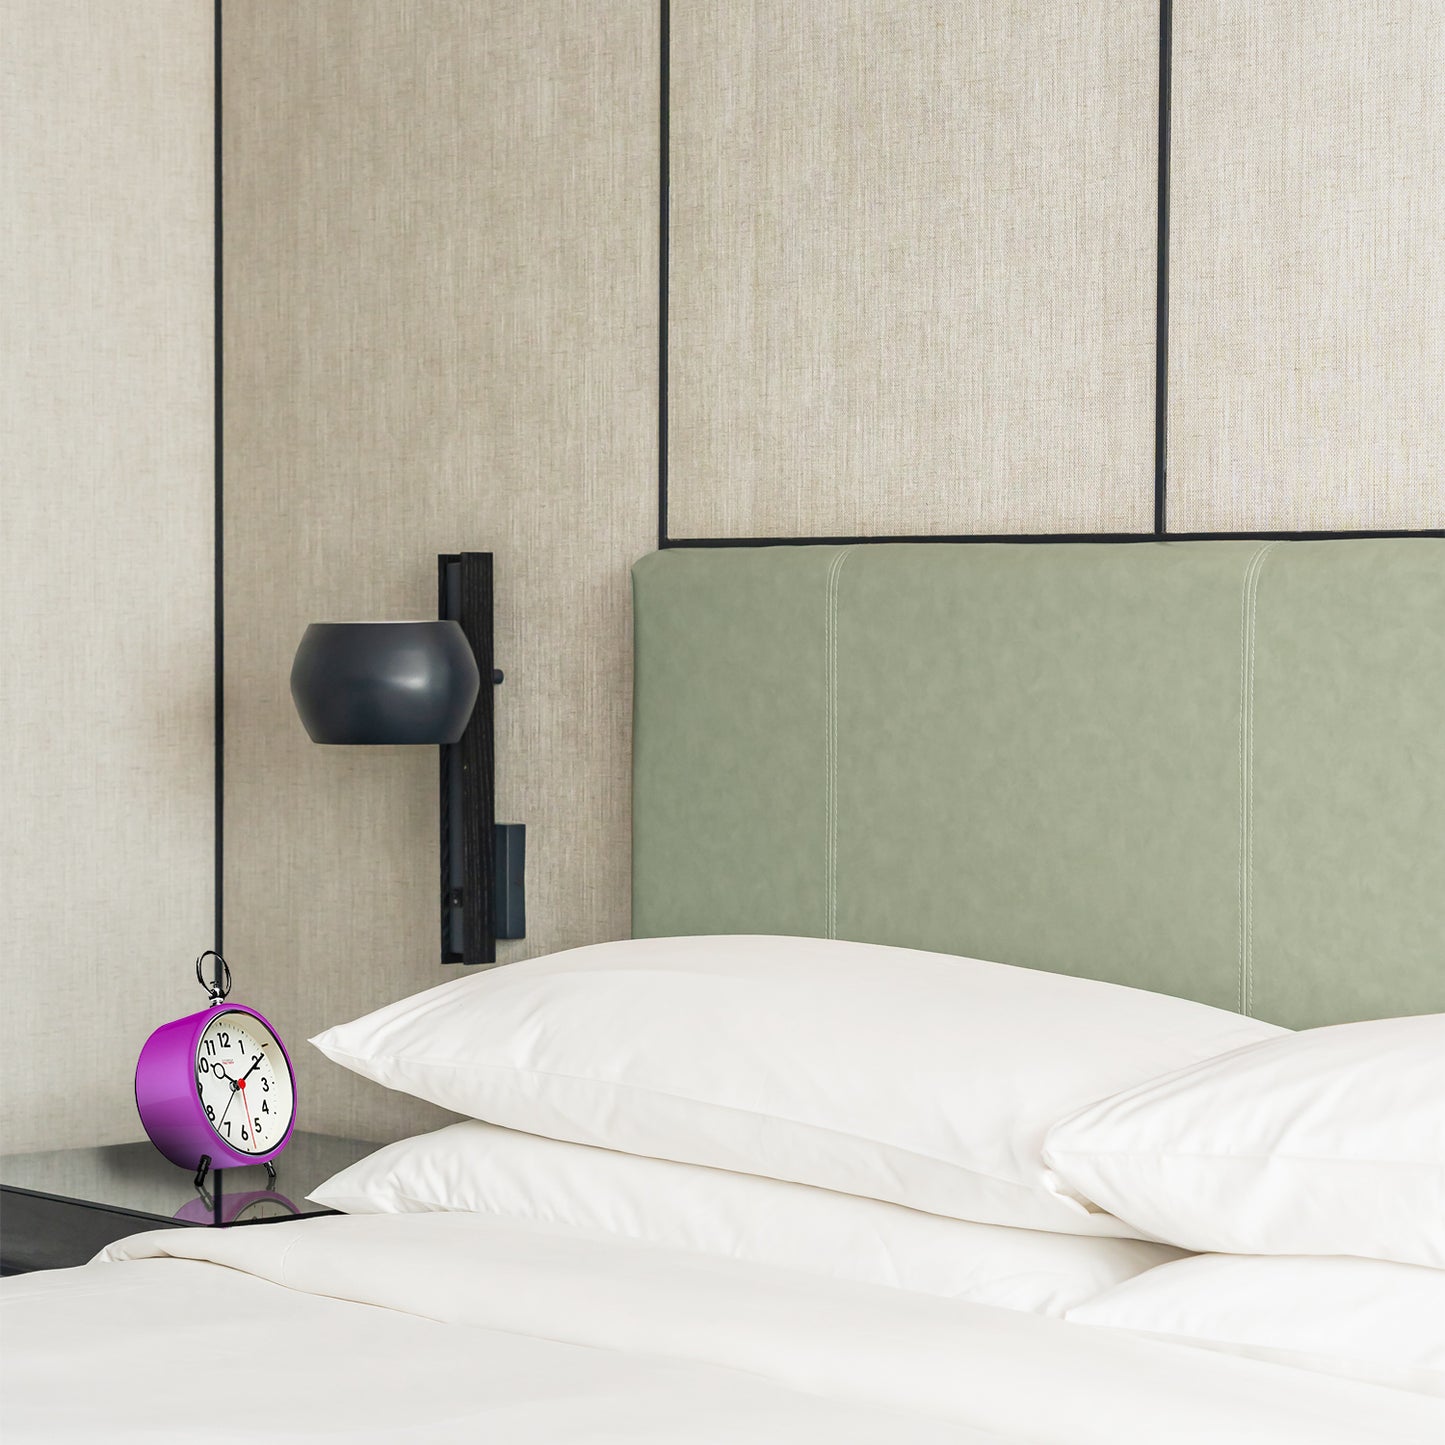 Factory Alarm Purple - Alarm Clock - Silent Mechanism - Snooze - LED